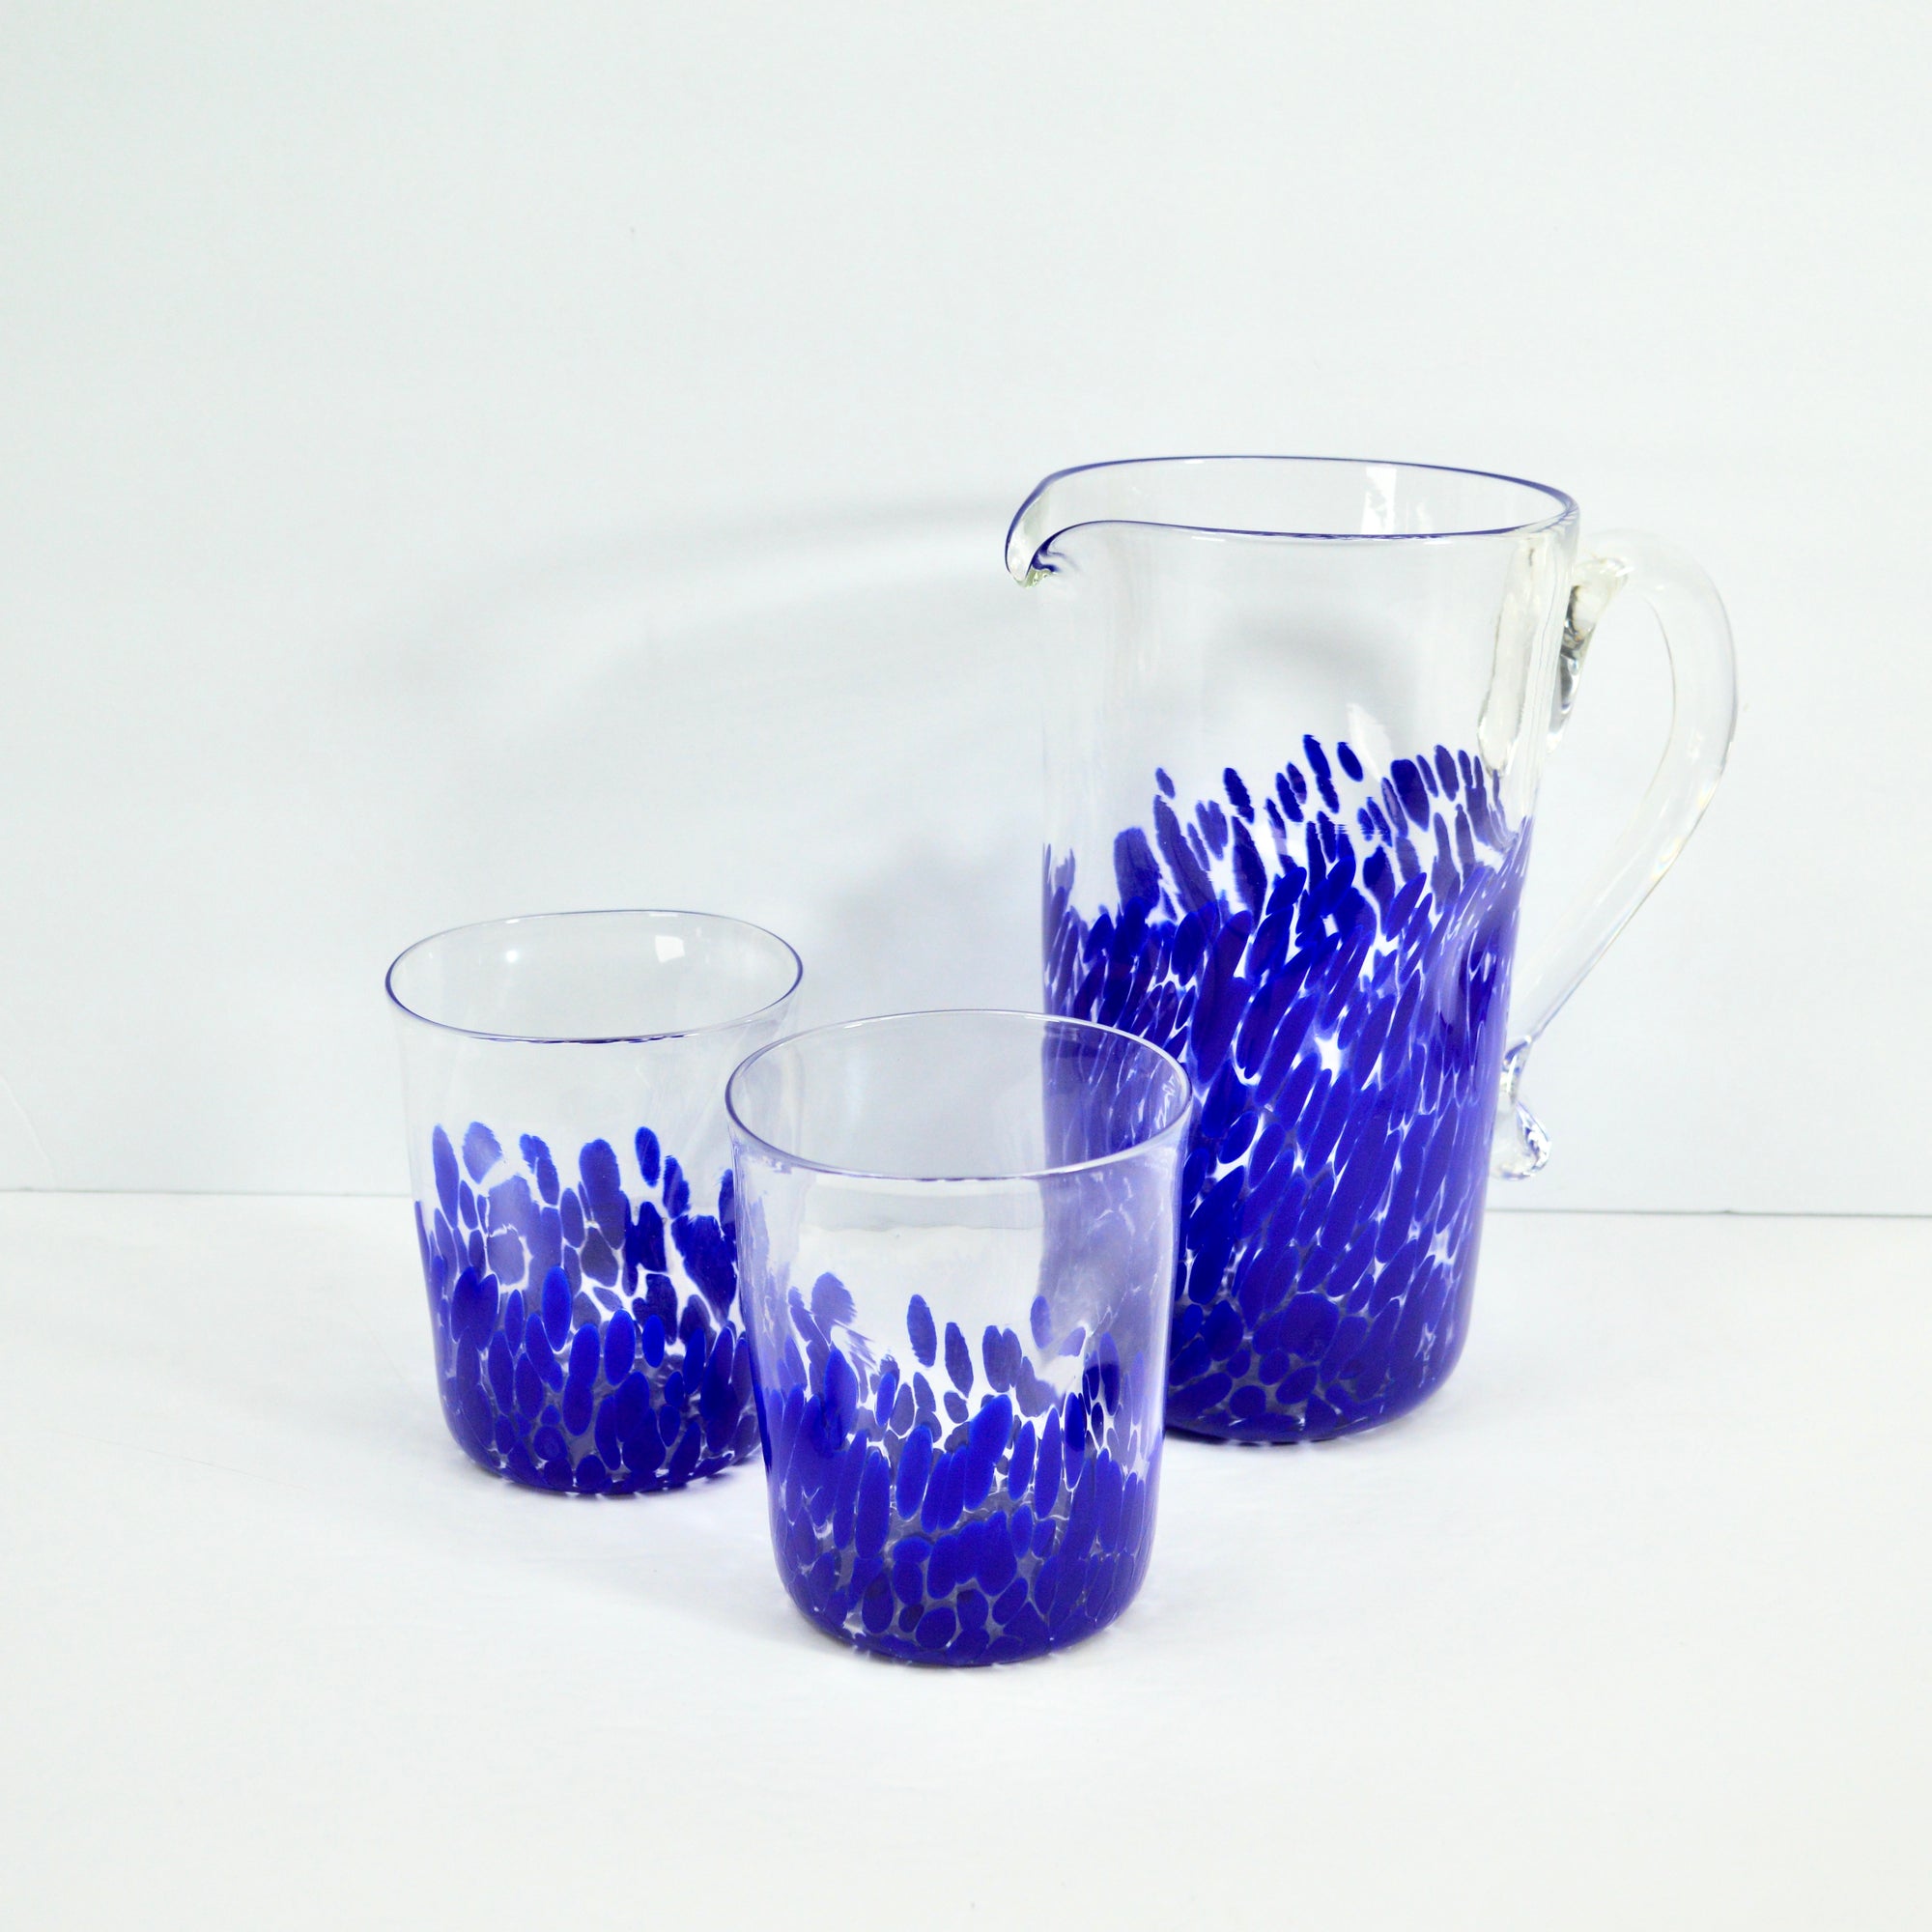 Allegra Murano Glass Pitcher & Glasses Set, Cobalt Blue, Made in Italy - My Italian Decor